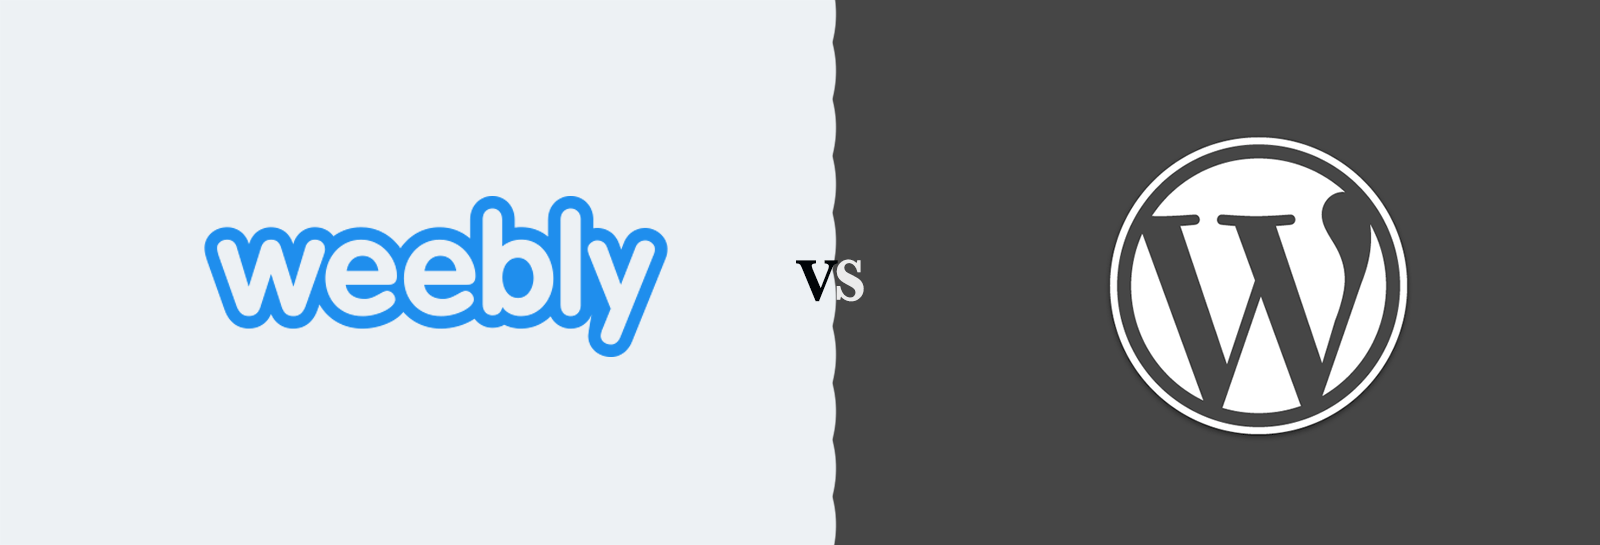 Weebly vs WordPress - Choosing The Right Platform!